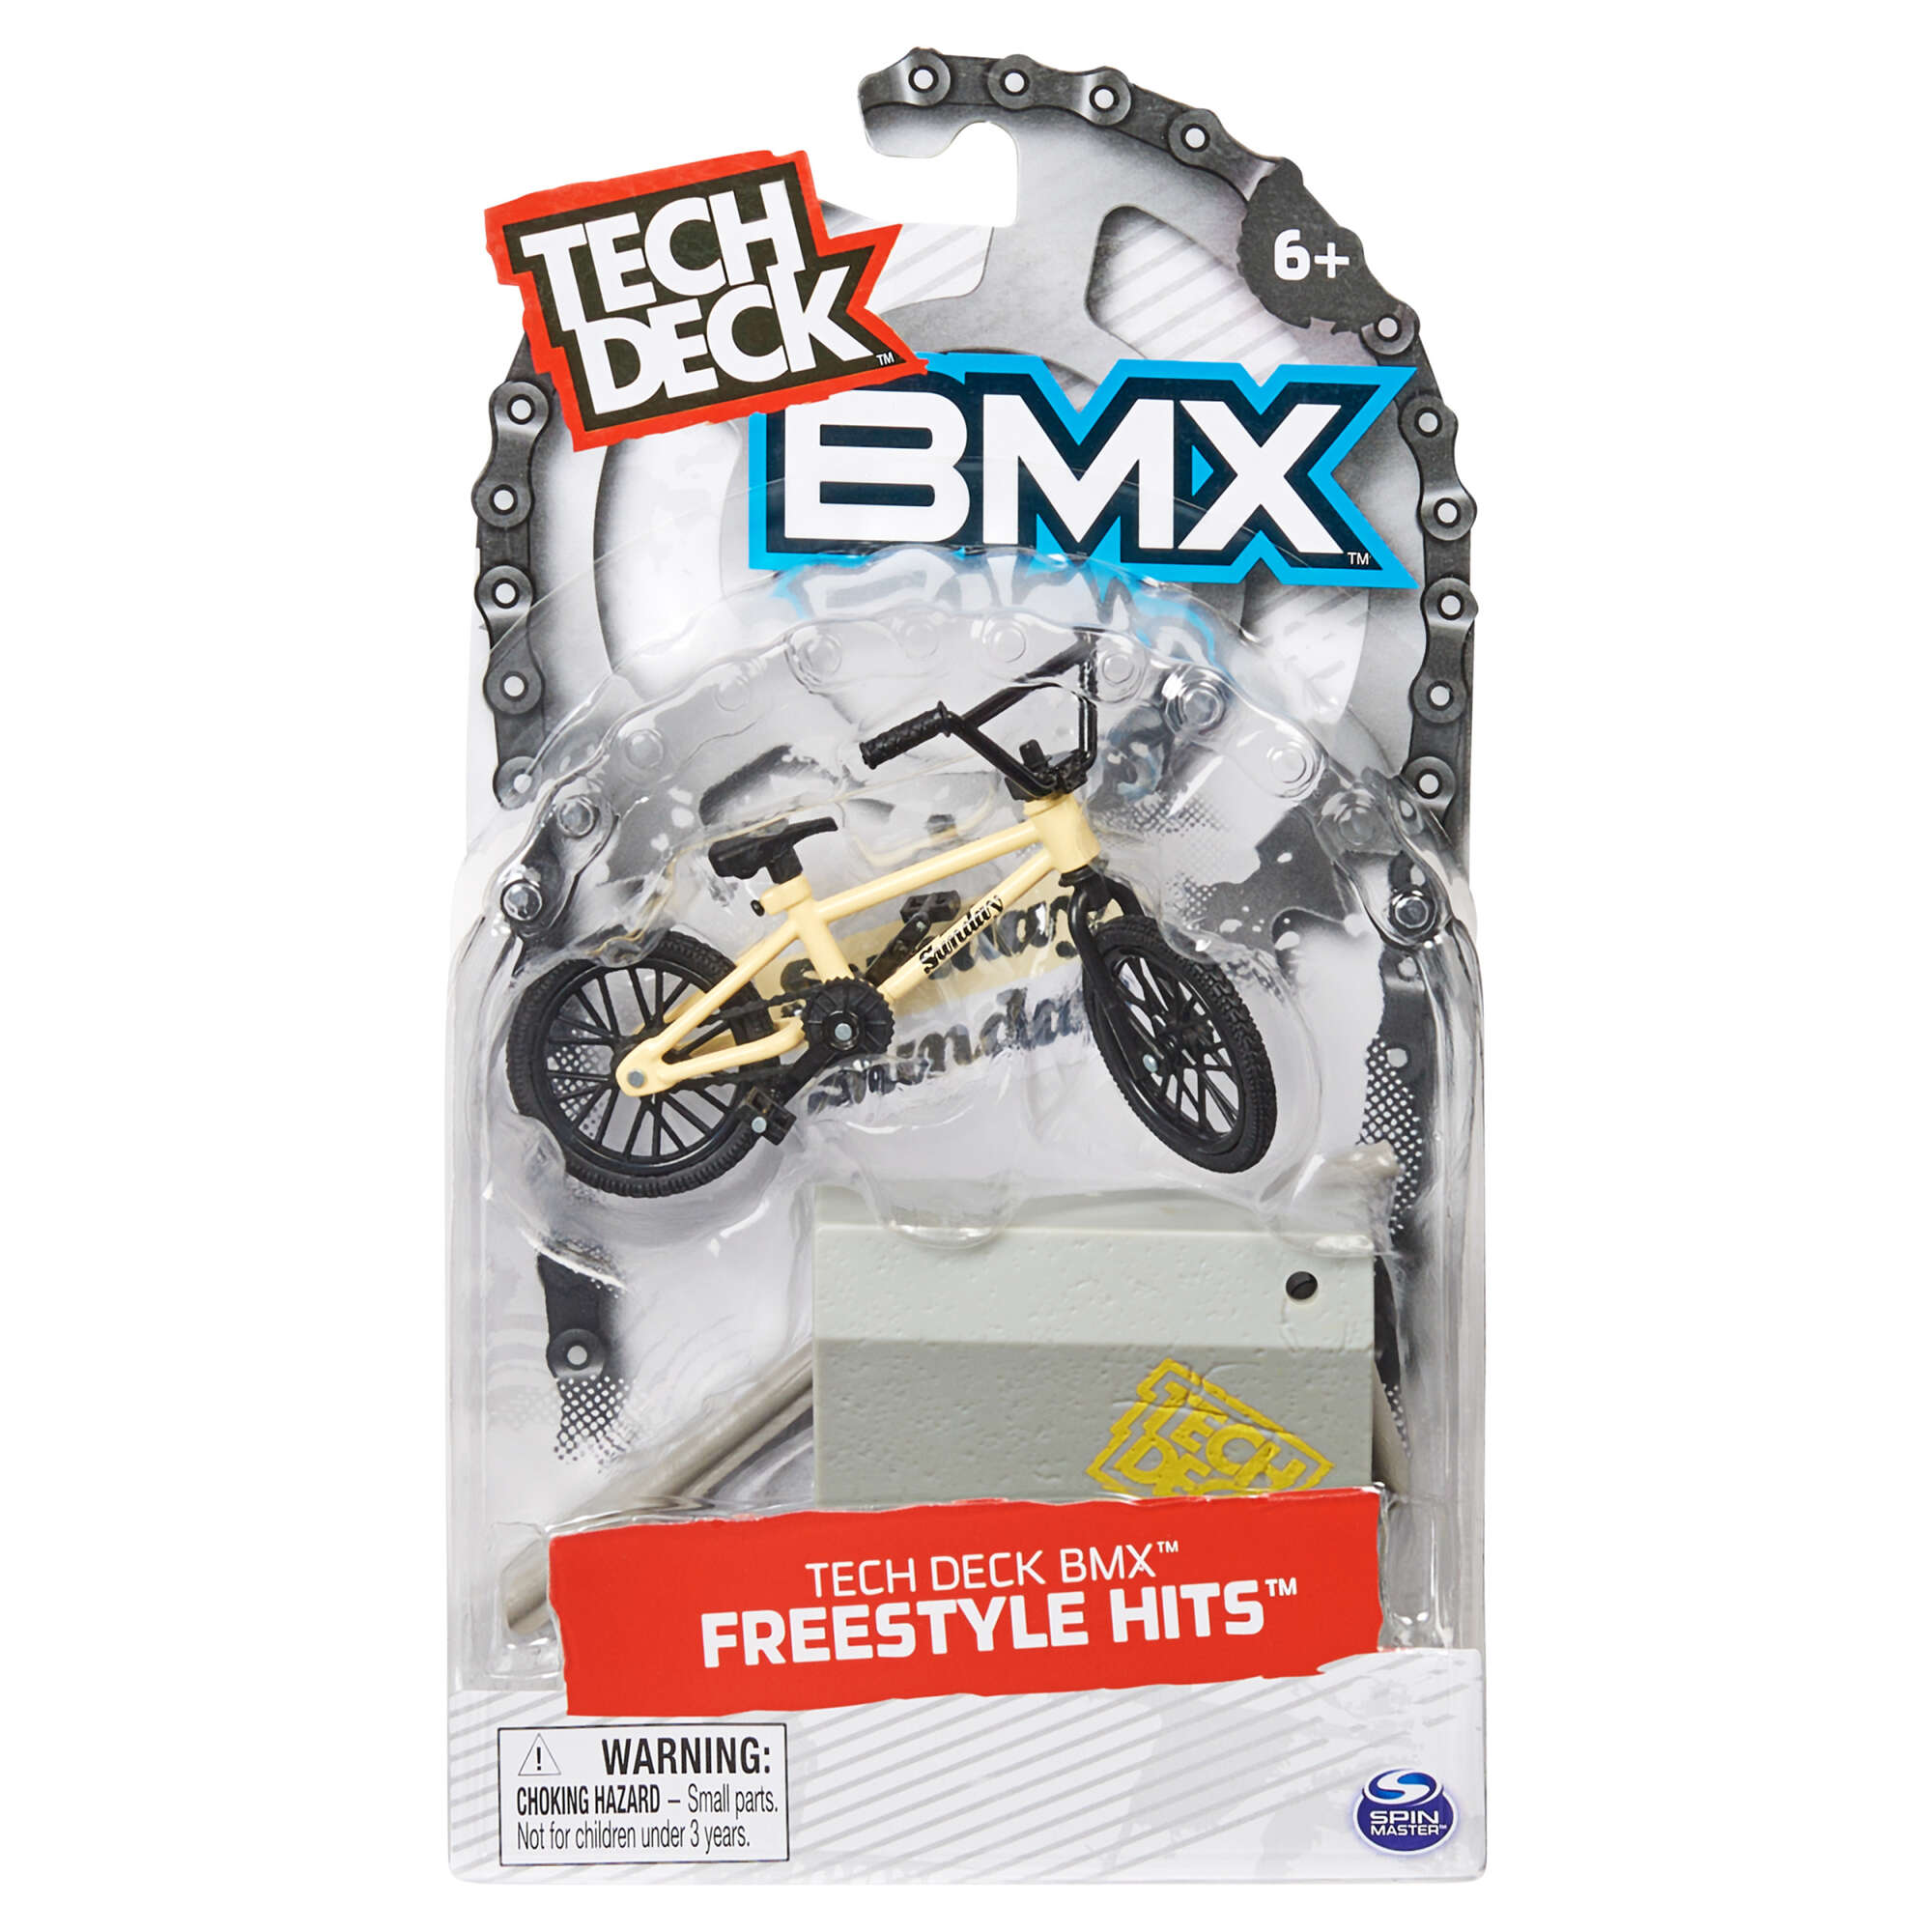 Tech Deck BMX Finger Bike Single Sunday Black